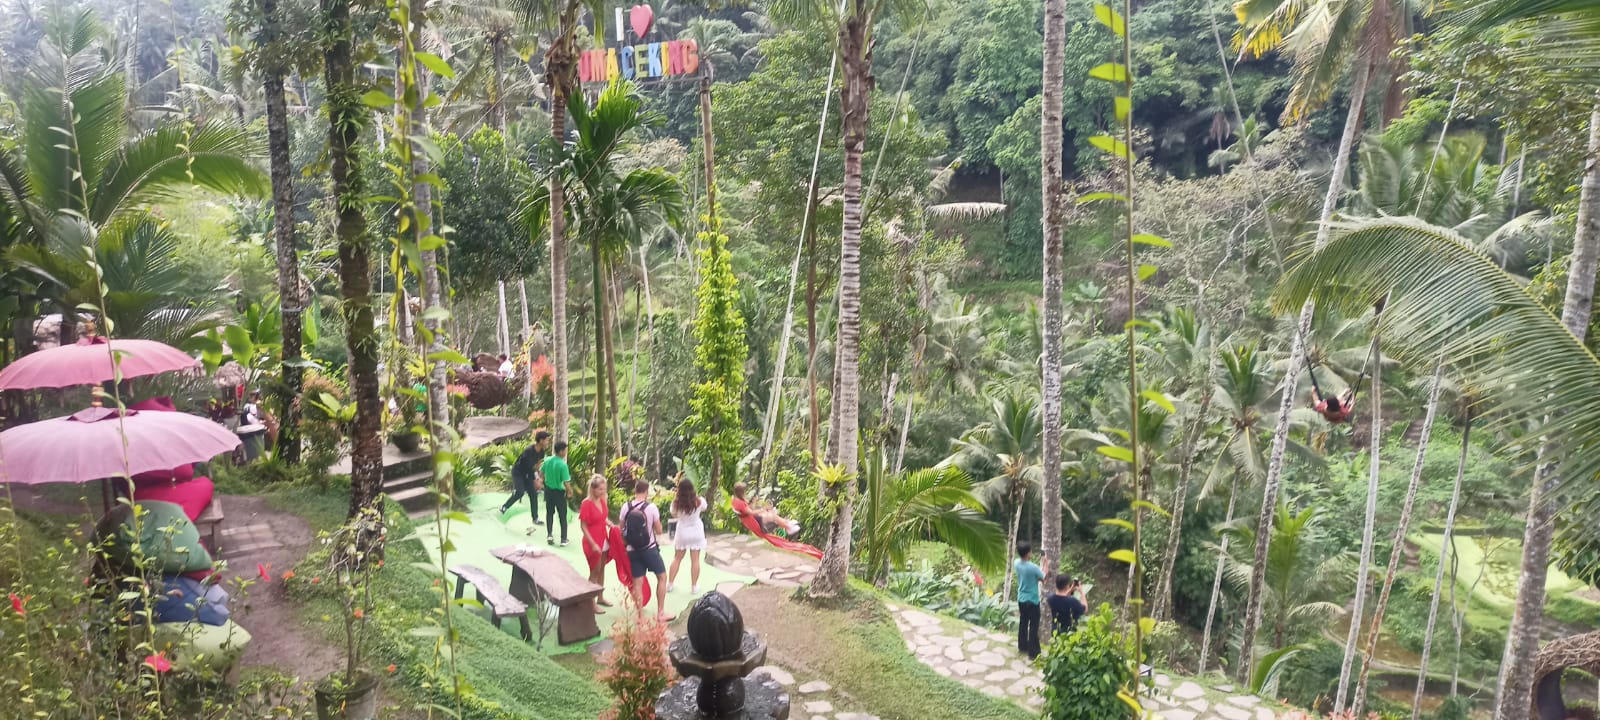 Paparan Wisata Sawah Berundak Ubud Bali